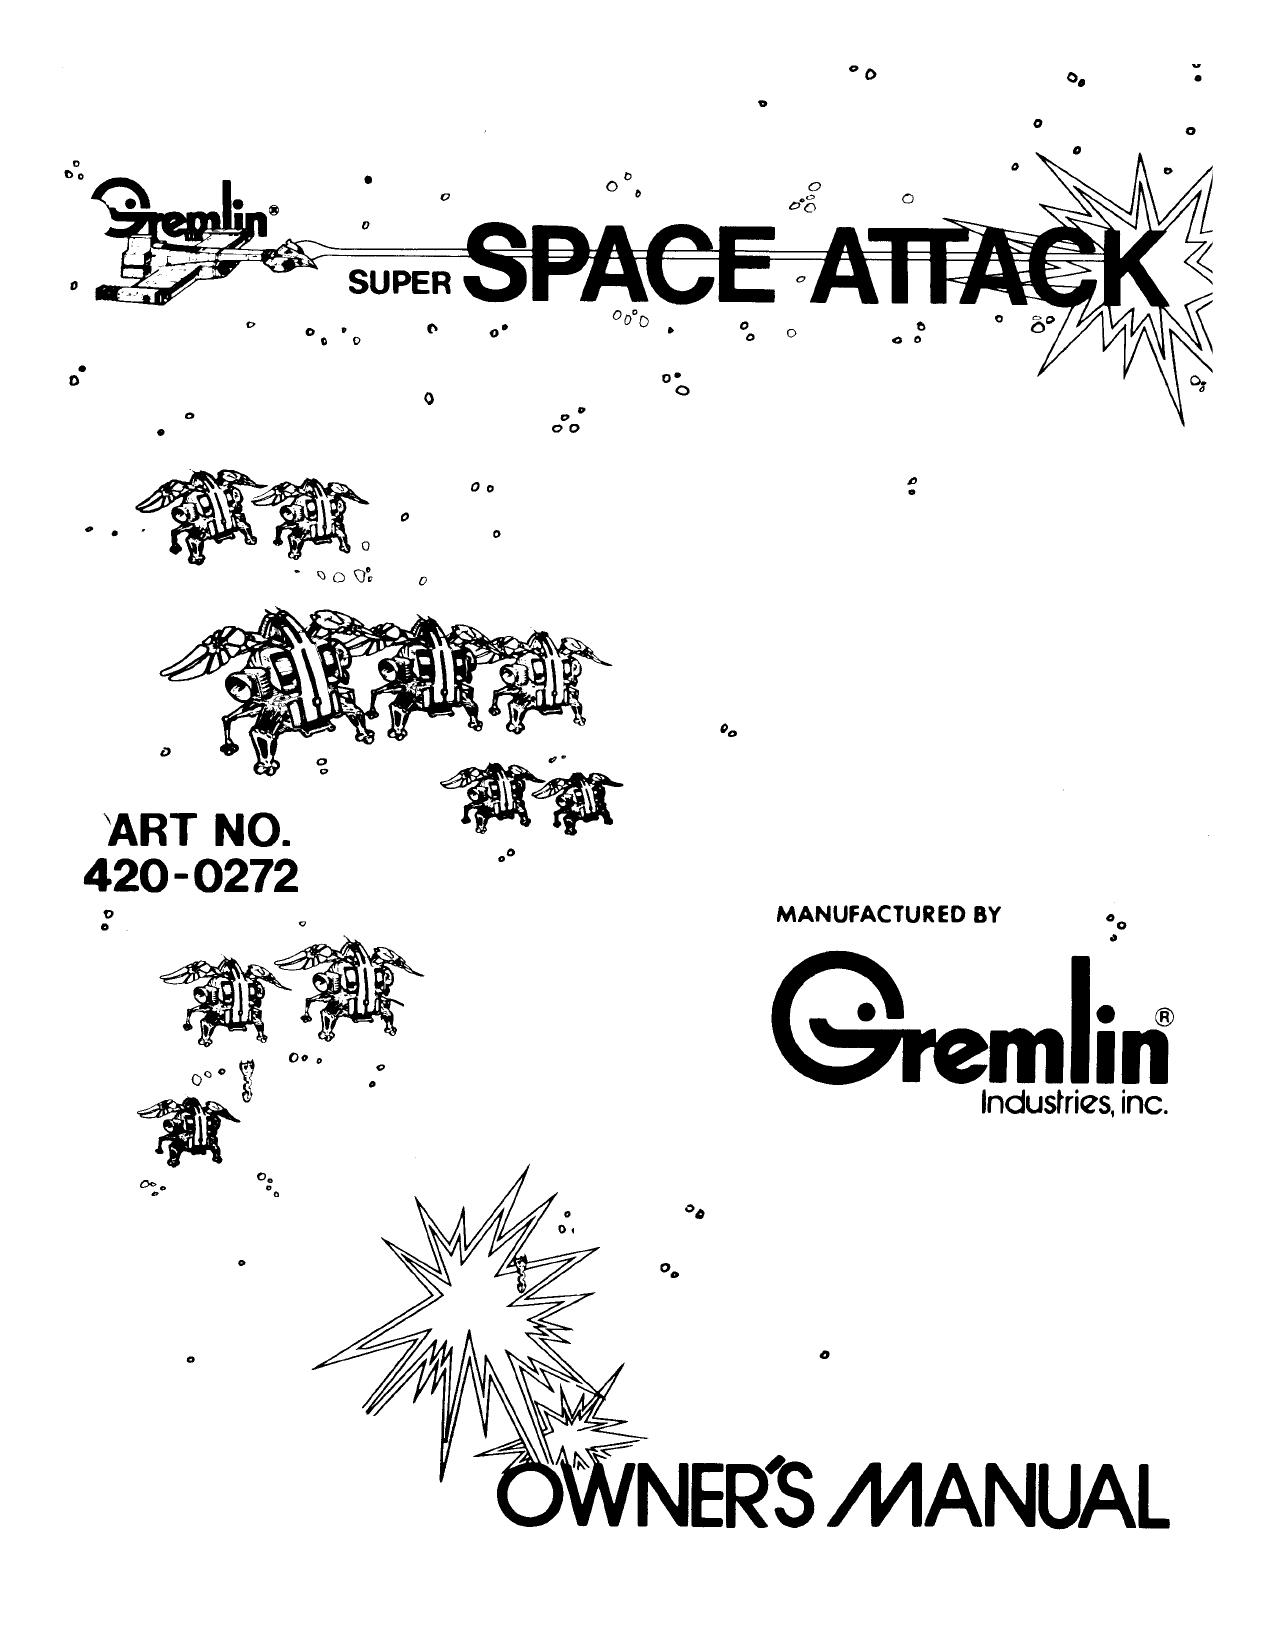 SuperSpaceAttack Manual